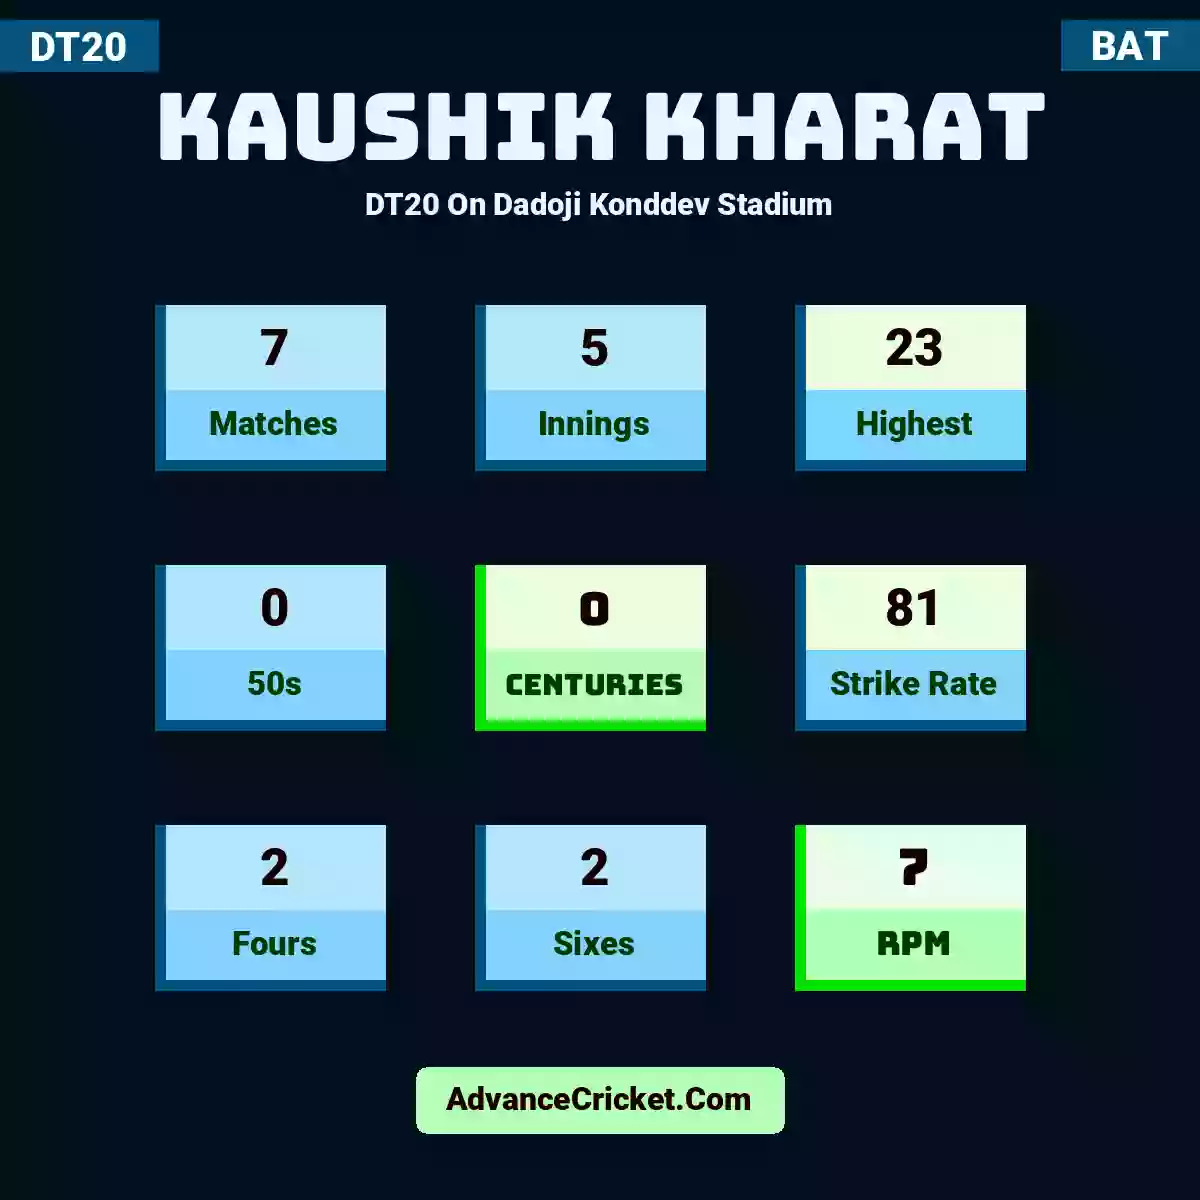 Kaushik Kharat DT20  On Dadoji Konddev Stadium, Kaushik Kharat played 7 matches, scored 23 runs as highest, 0 half-centuries, and 0 centuries, with a strike rate of 81. K.Kharat hit 2 fours and 2 sixes, with an RPM of 7.